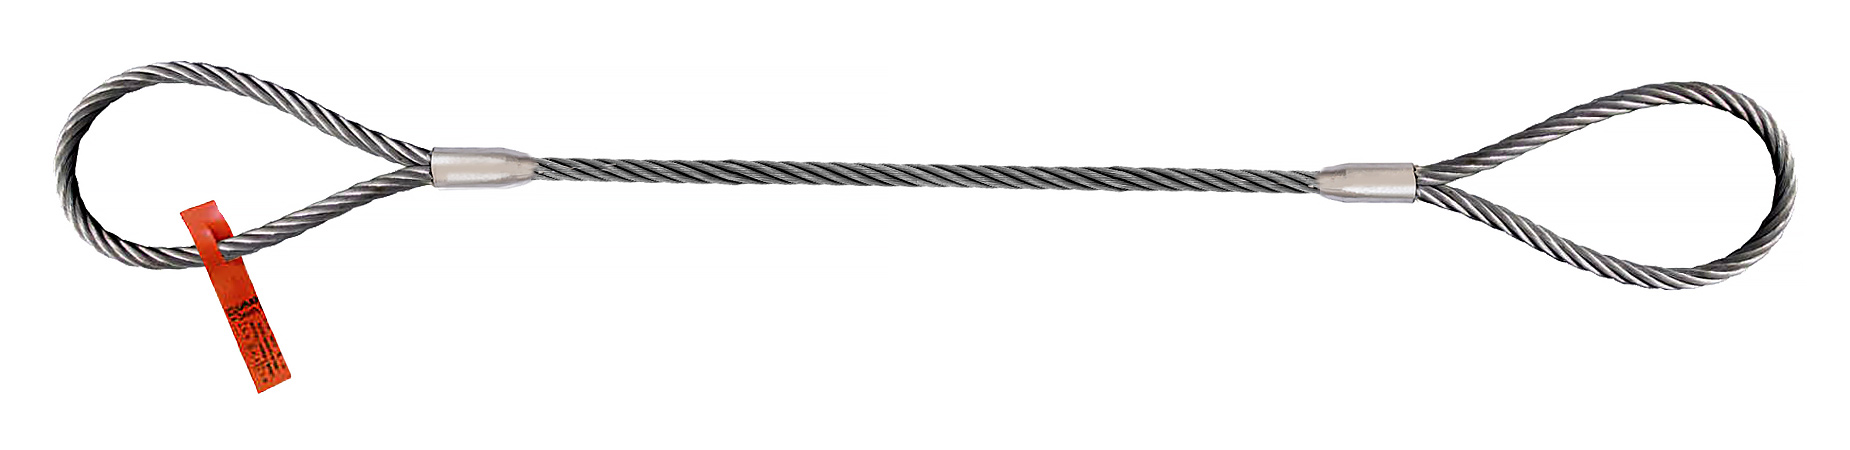 8 Length Vertical Liftall 1EZEEX8 Sling Wire Rope 13800 lb 